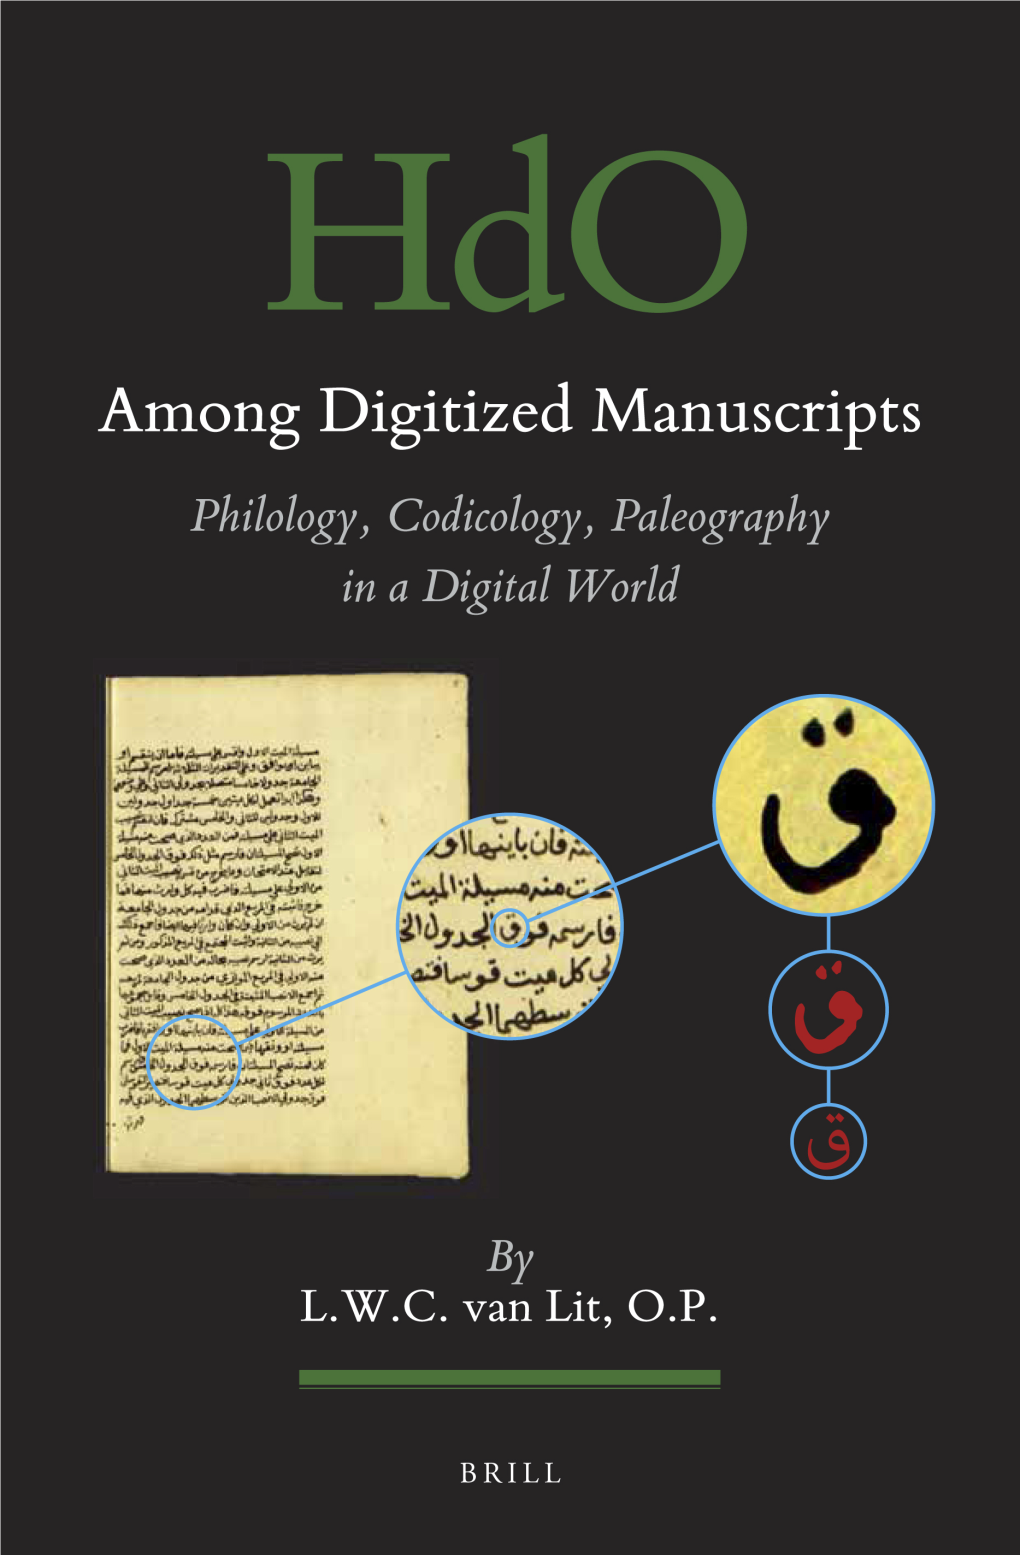 Postscript. Among Digitized Manuscripts 292